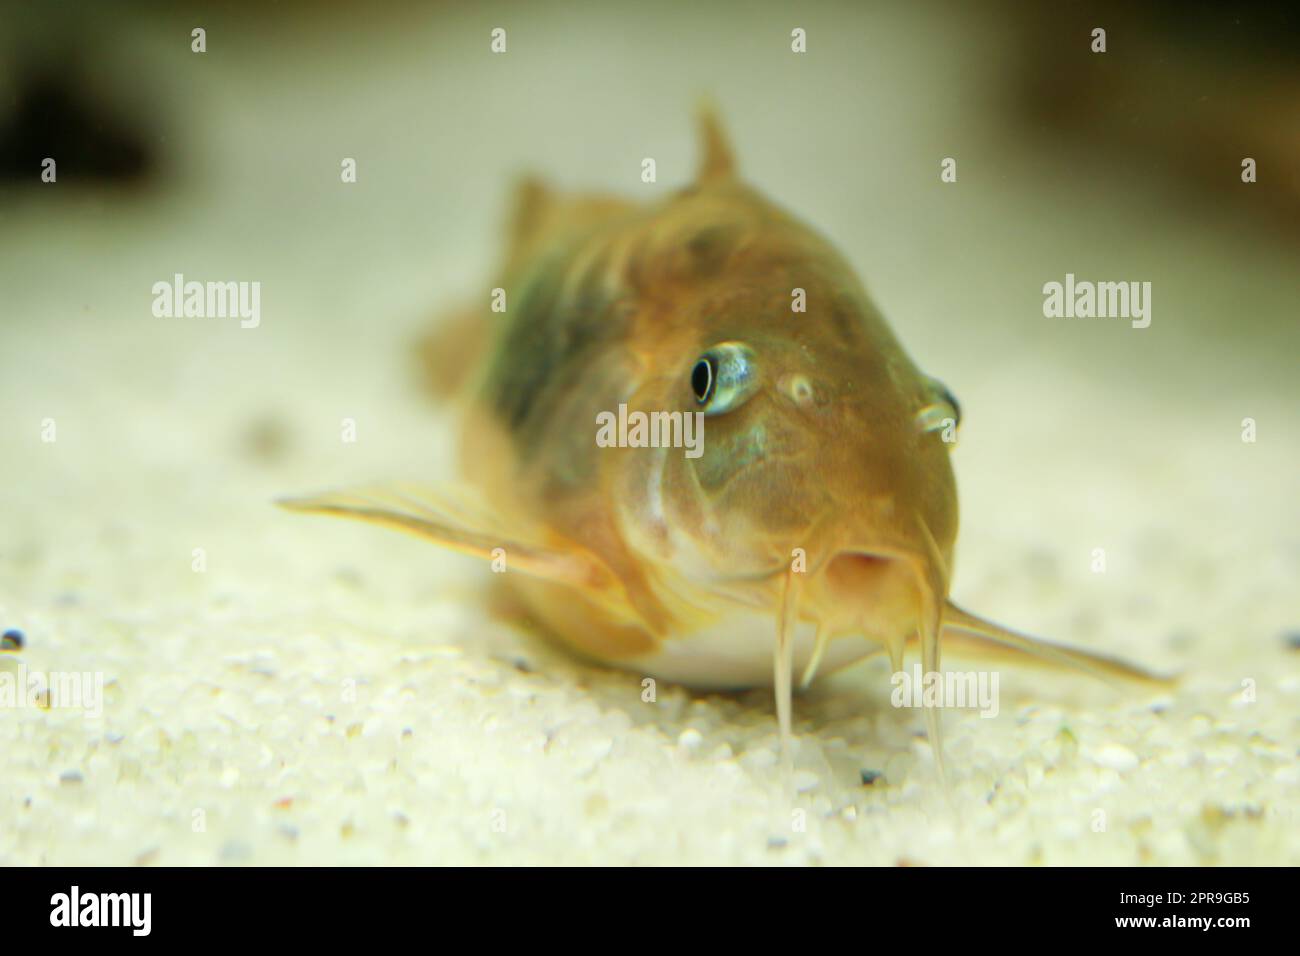 A metal armored catfish at the bottom of an aquarium. Stock Photo